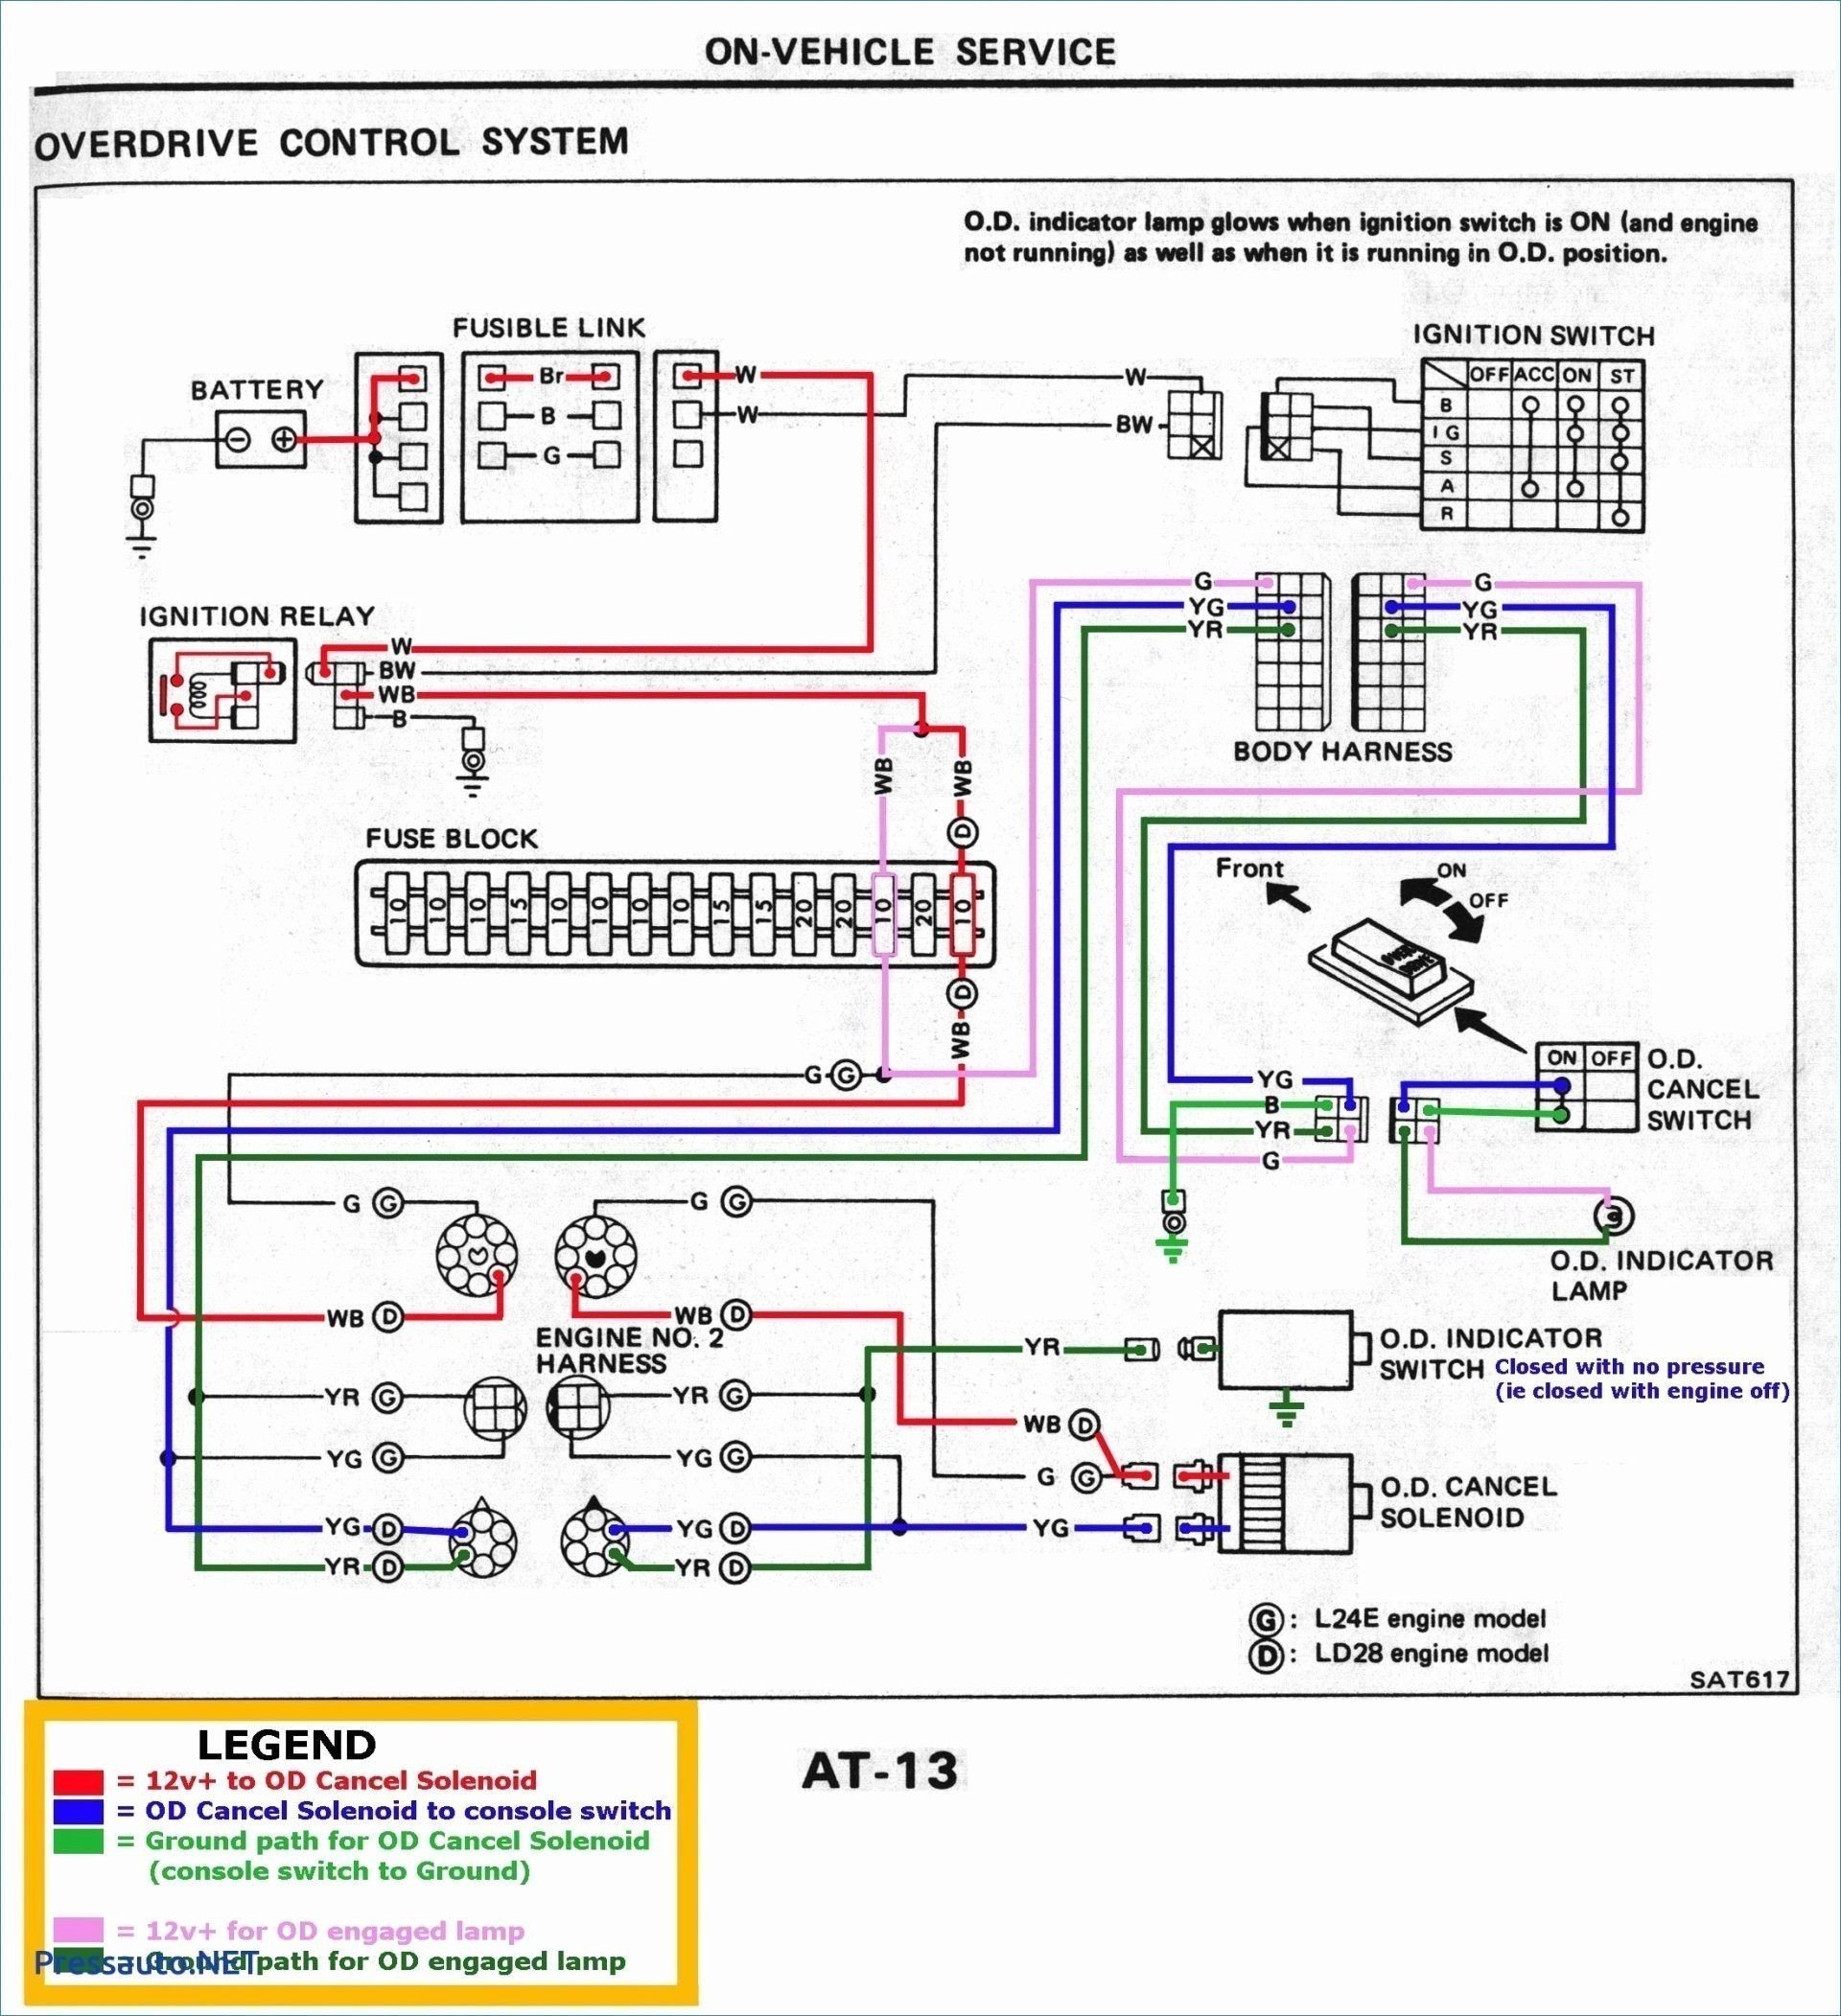 Turn Signal Flasher Relay Wiring Diagram Technical Drawing Book Pdf In 2020 Of Turn Signal Flasher Relay Wiring Diagram